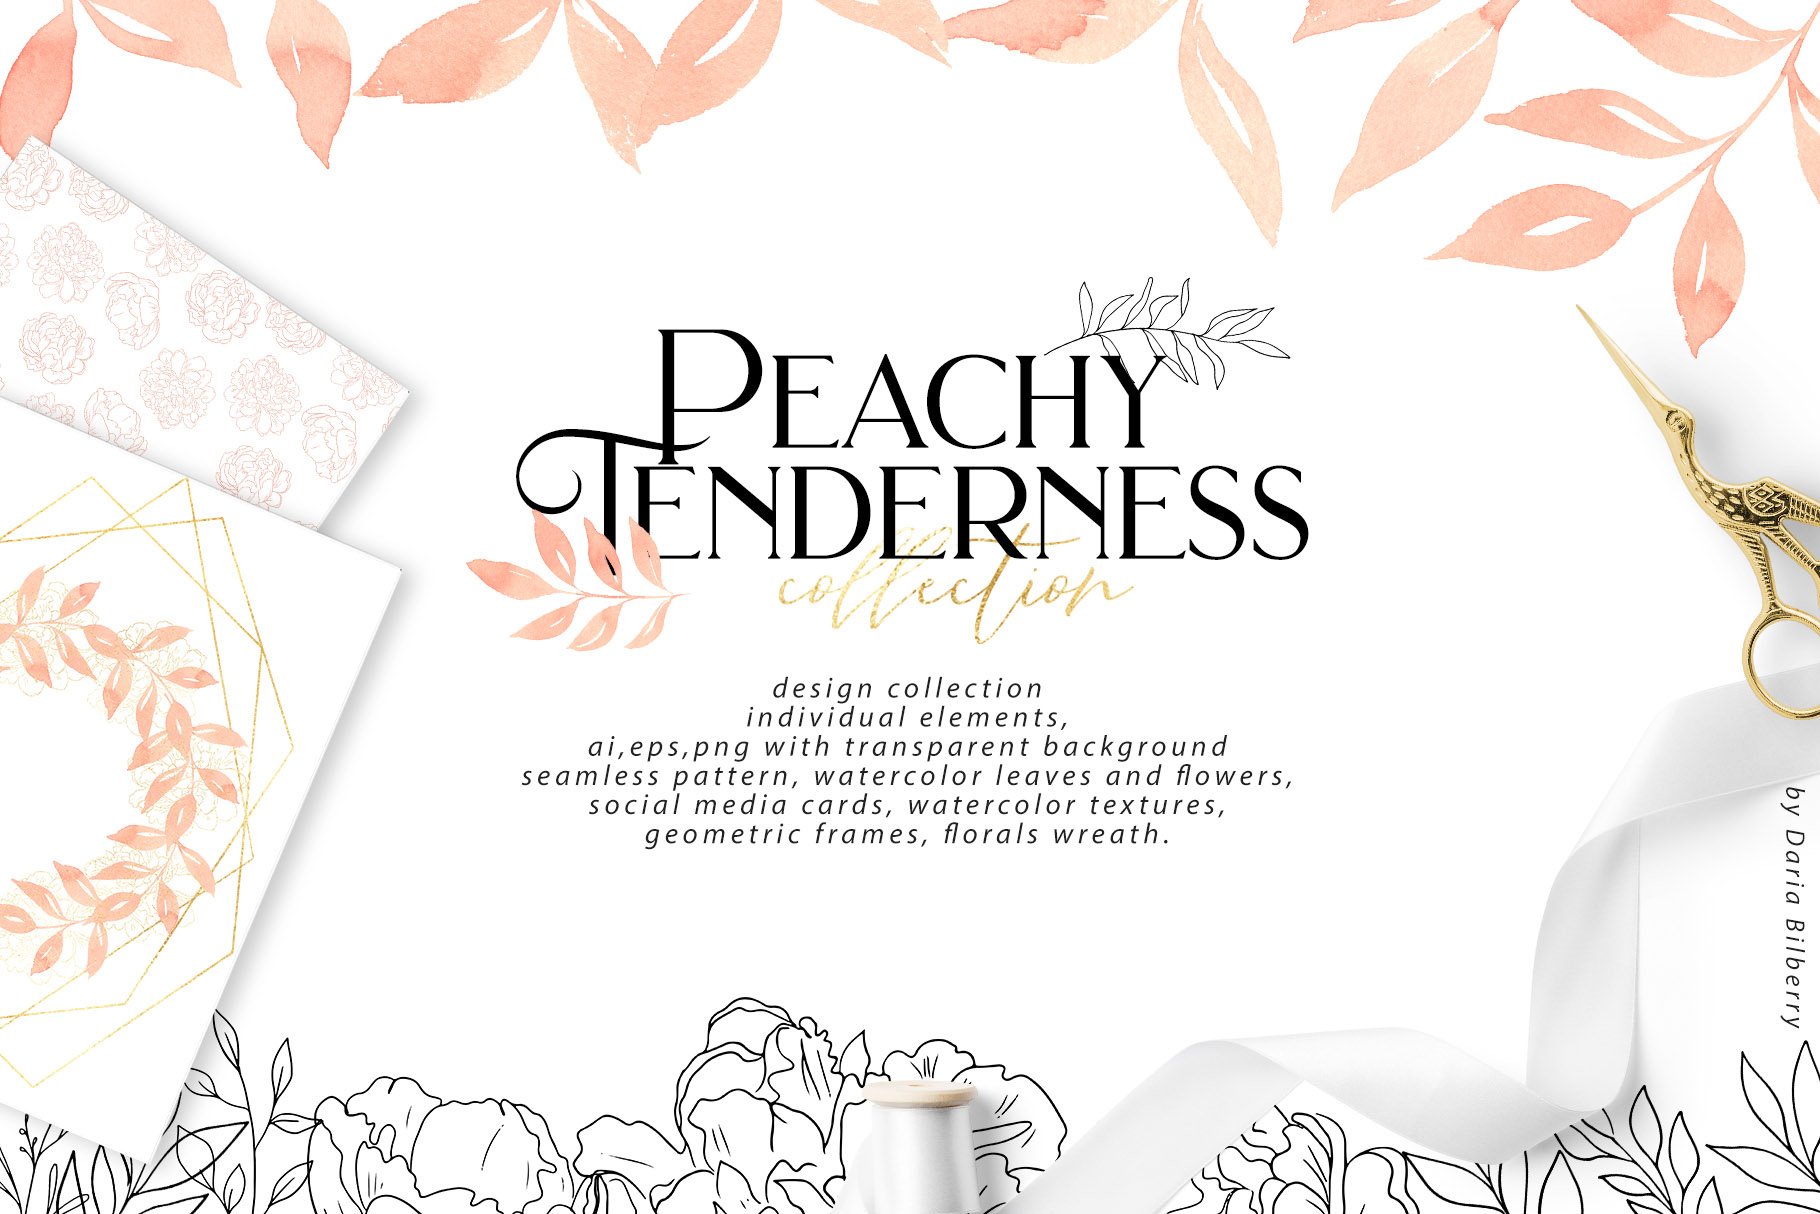 Peachy Tenderness